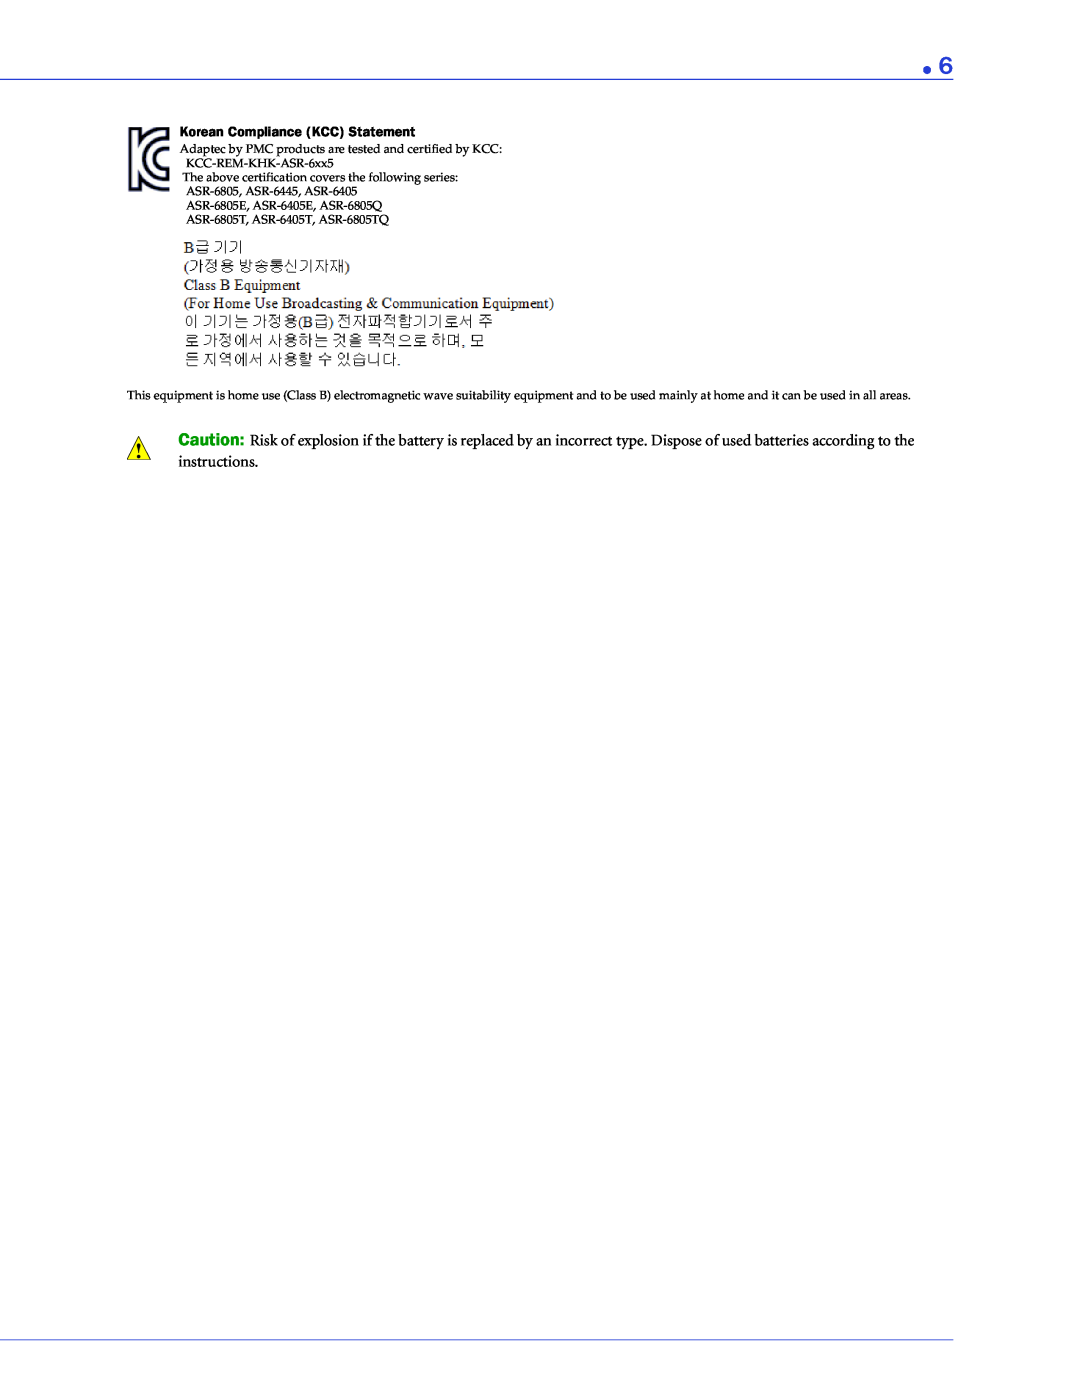 Adaptec 2268300R manual instructions, Korean Compliance KCC Statement 